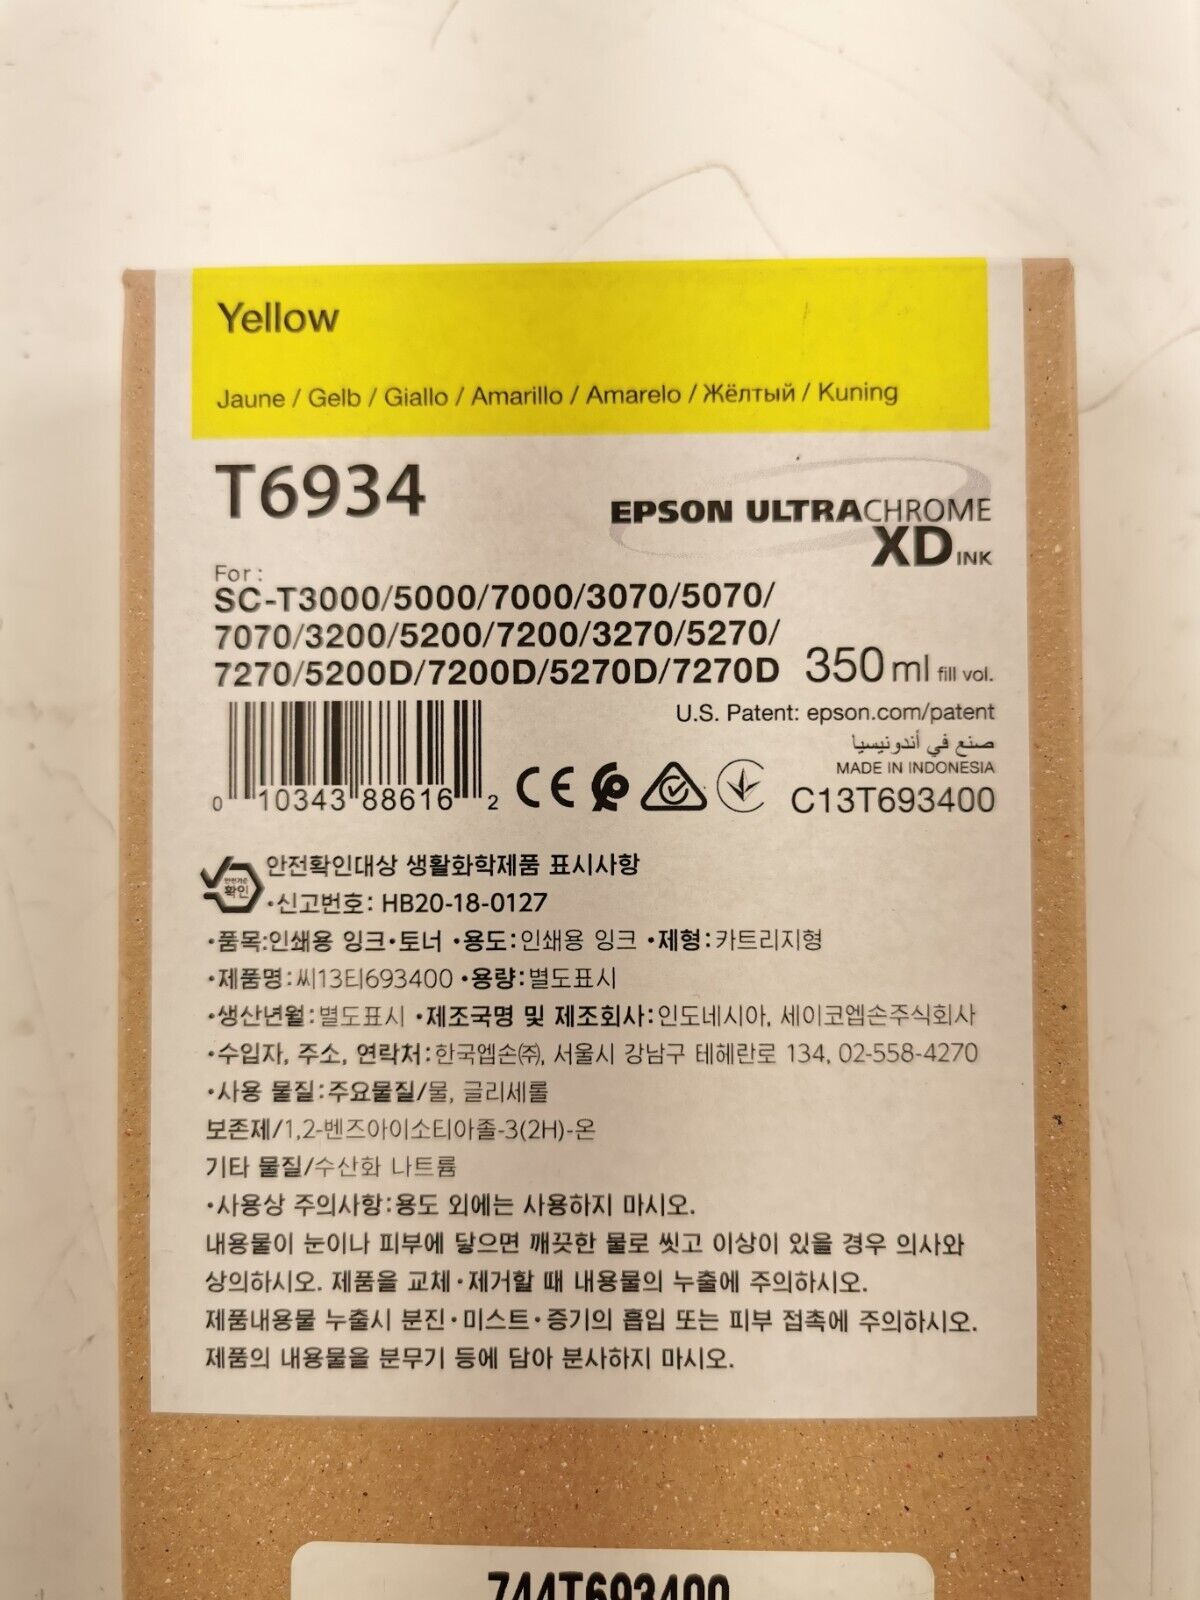 Epson ultra chrome xd ink T6934, Yellow.